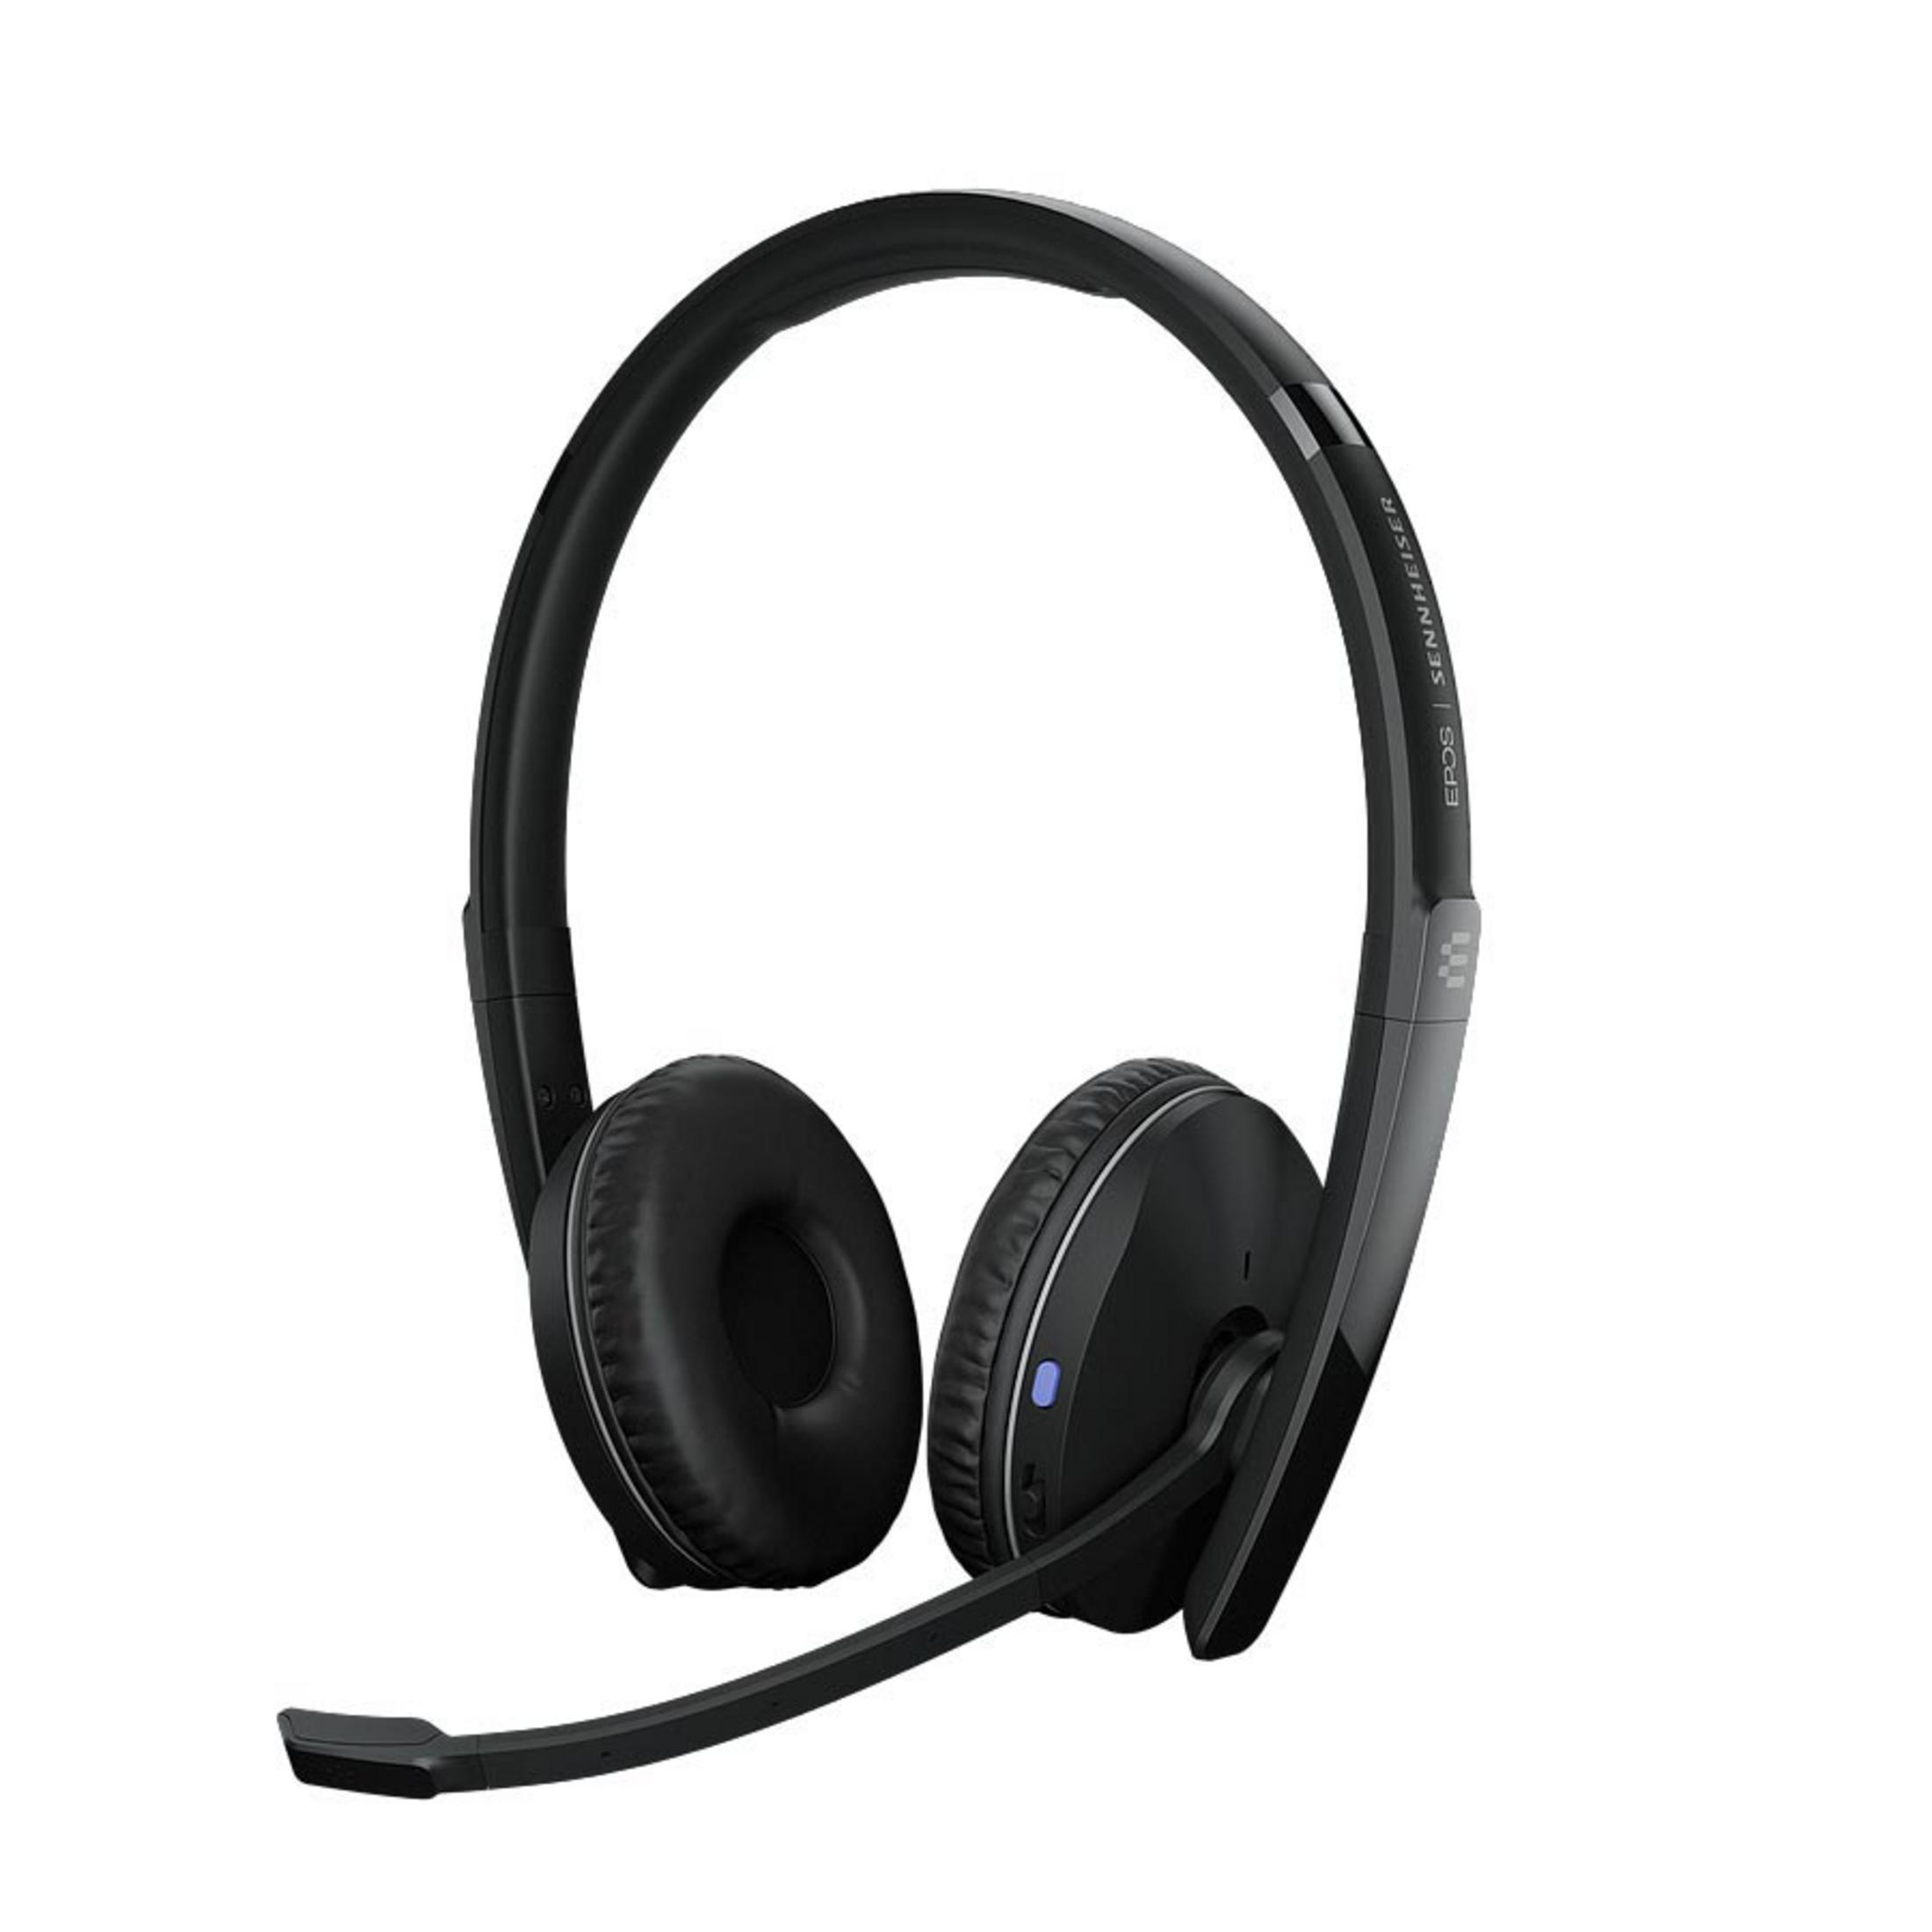 EPOS 1001146 C20 HEADSET WIRELESS Schwarz On-ear BLACK, COMMUNICATION Headset